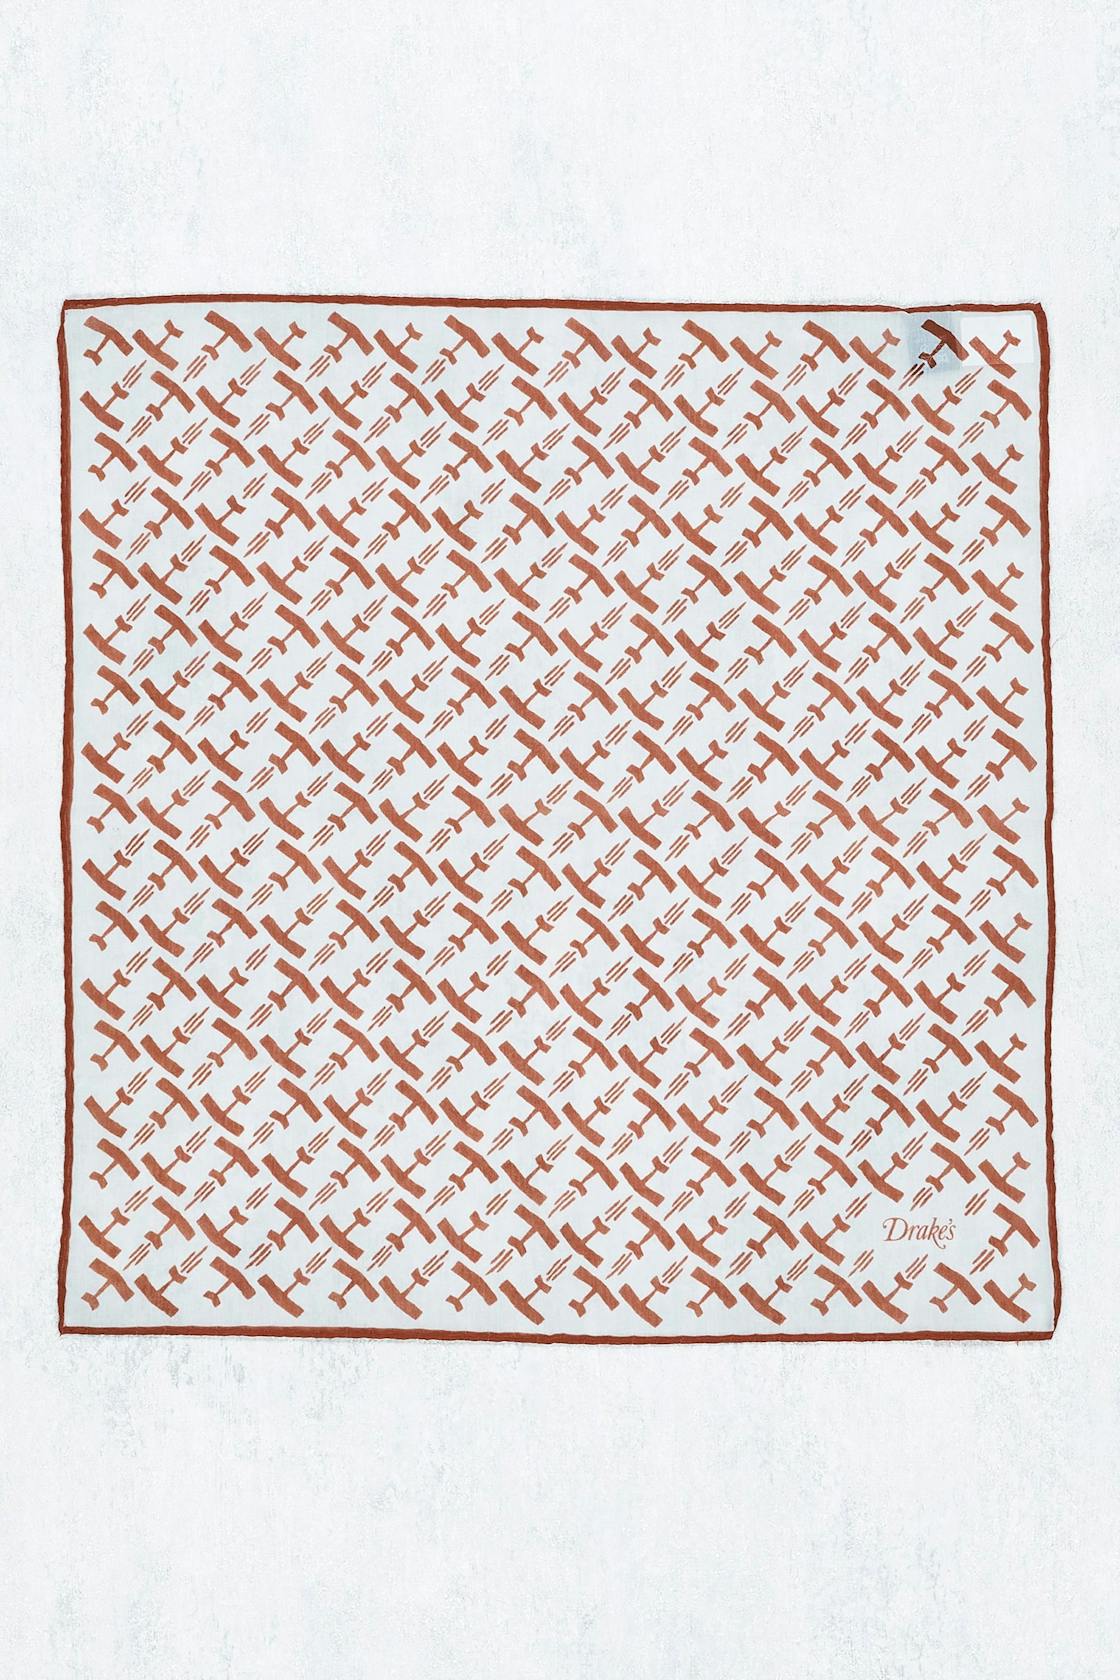 Drake's White with Red-Brown Plane Pattern Cotton/Silk Pocket Square